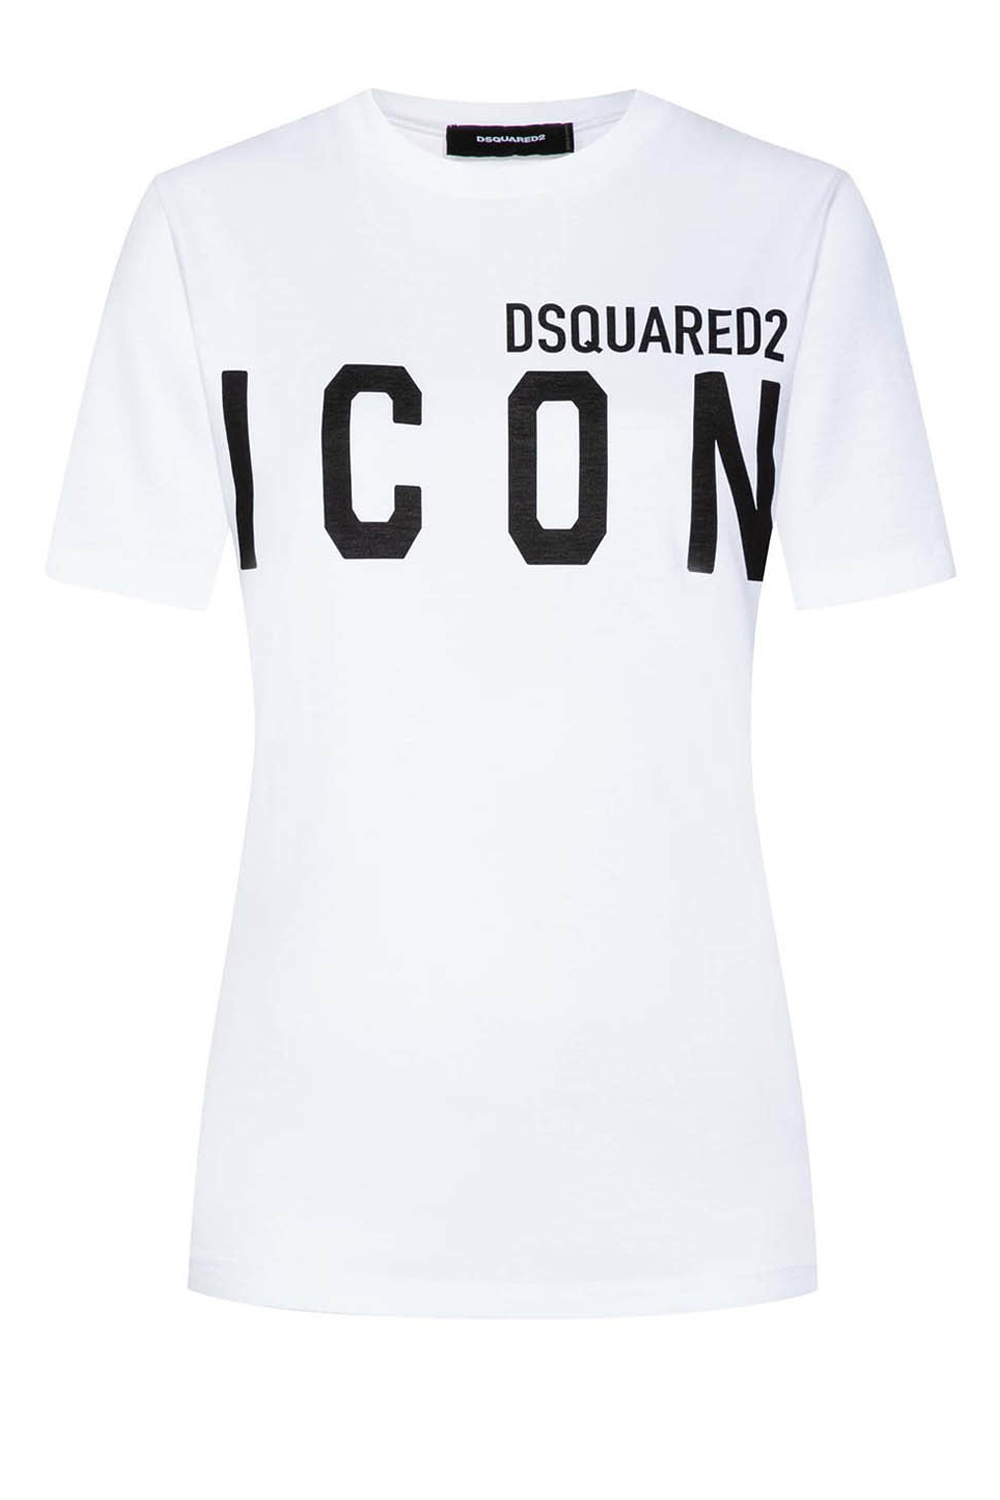 campus Blaze ademen Dsquared2 Icon t-shirt Wit - Dresscode